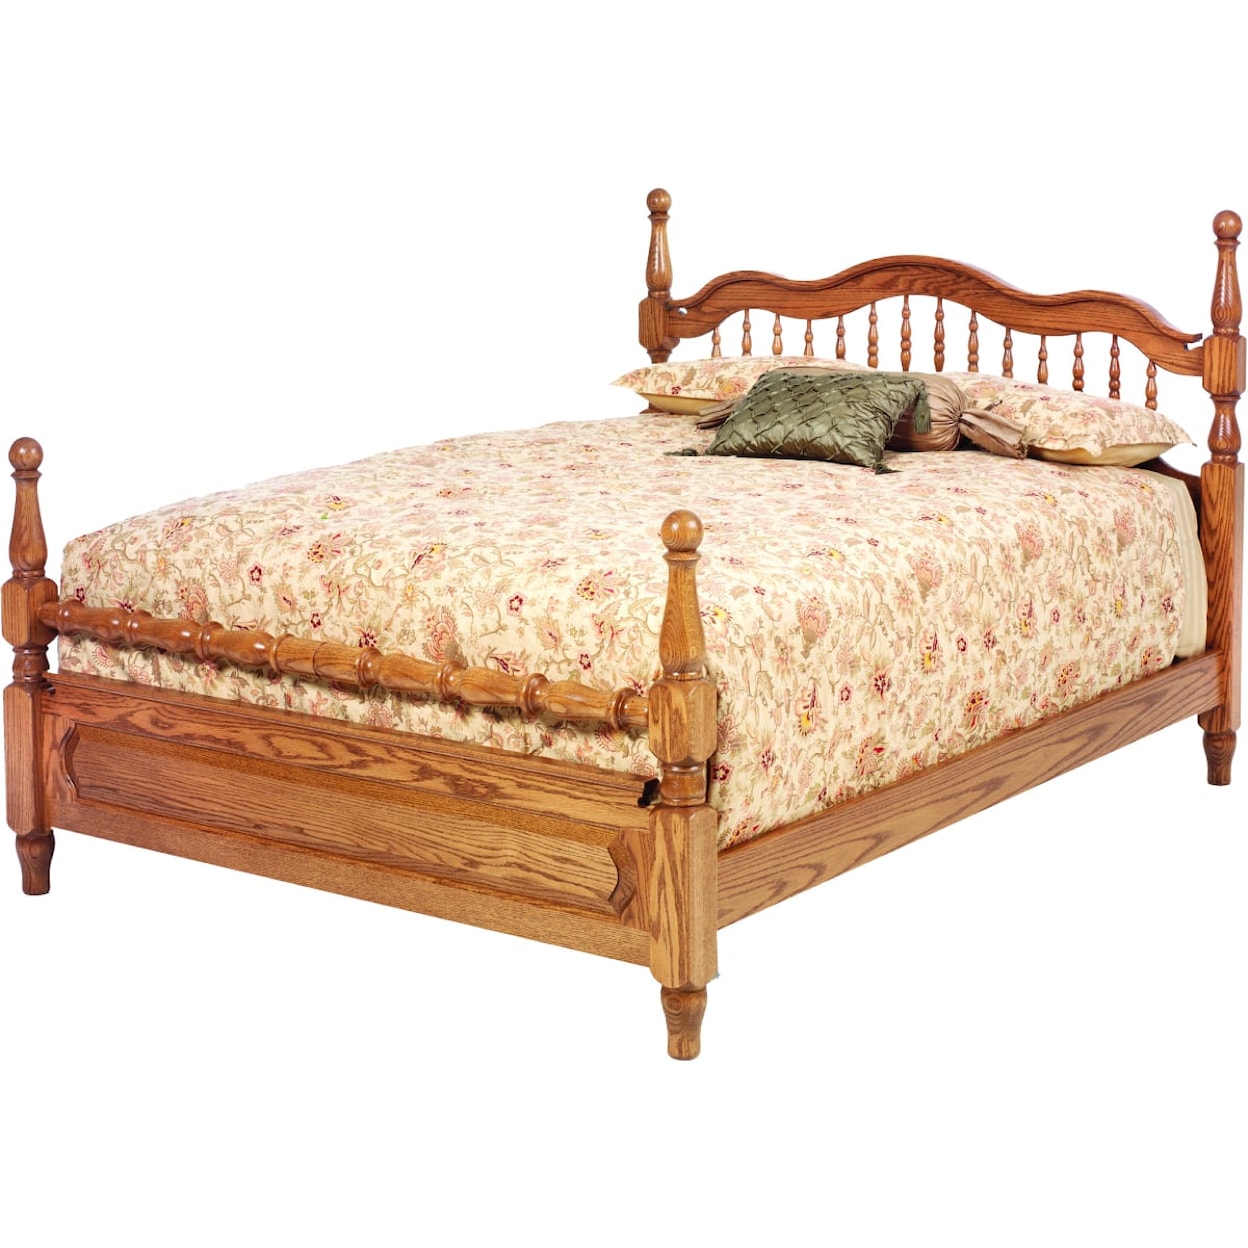 Millcraft Sierra Classic King Sierra Crest Bed